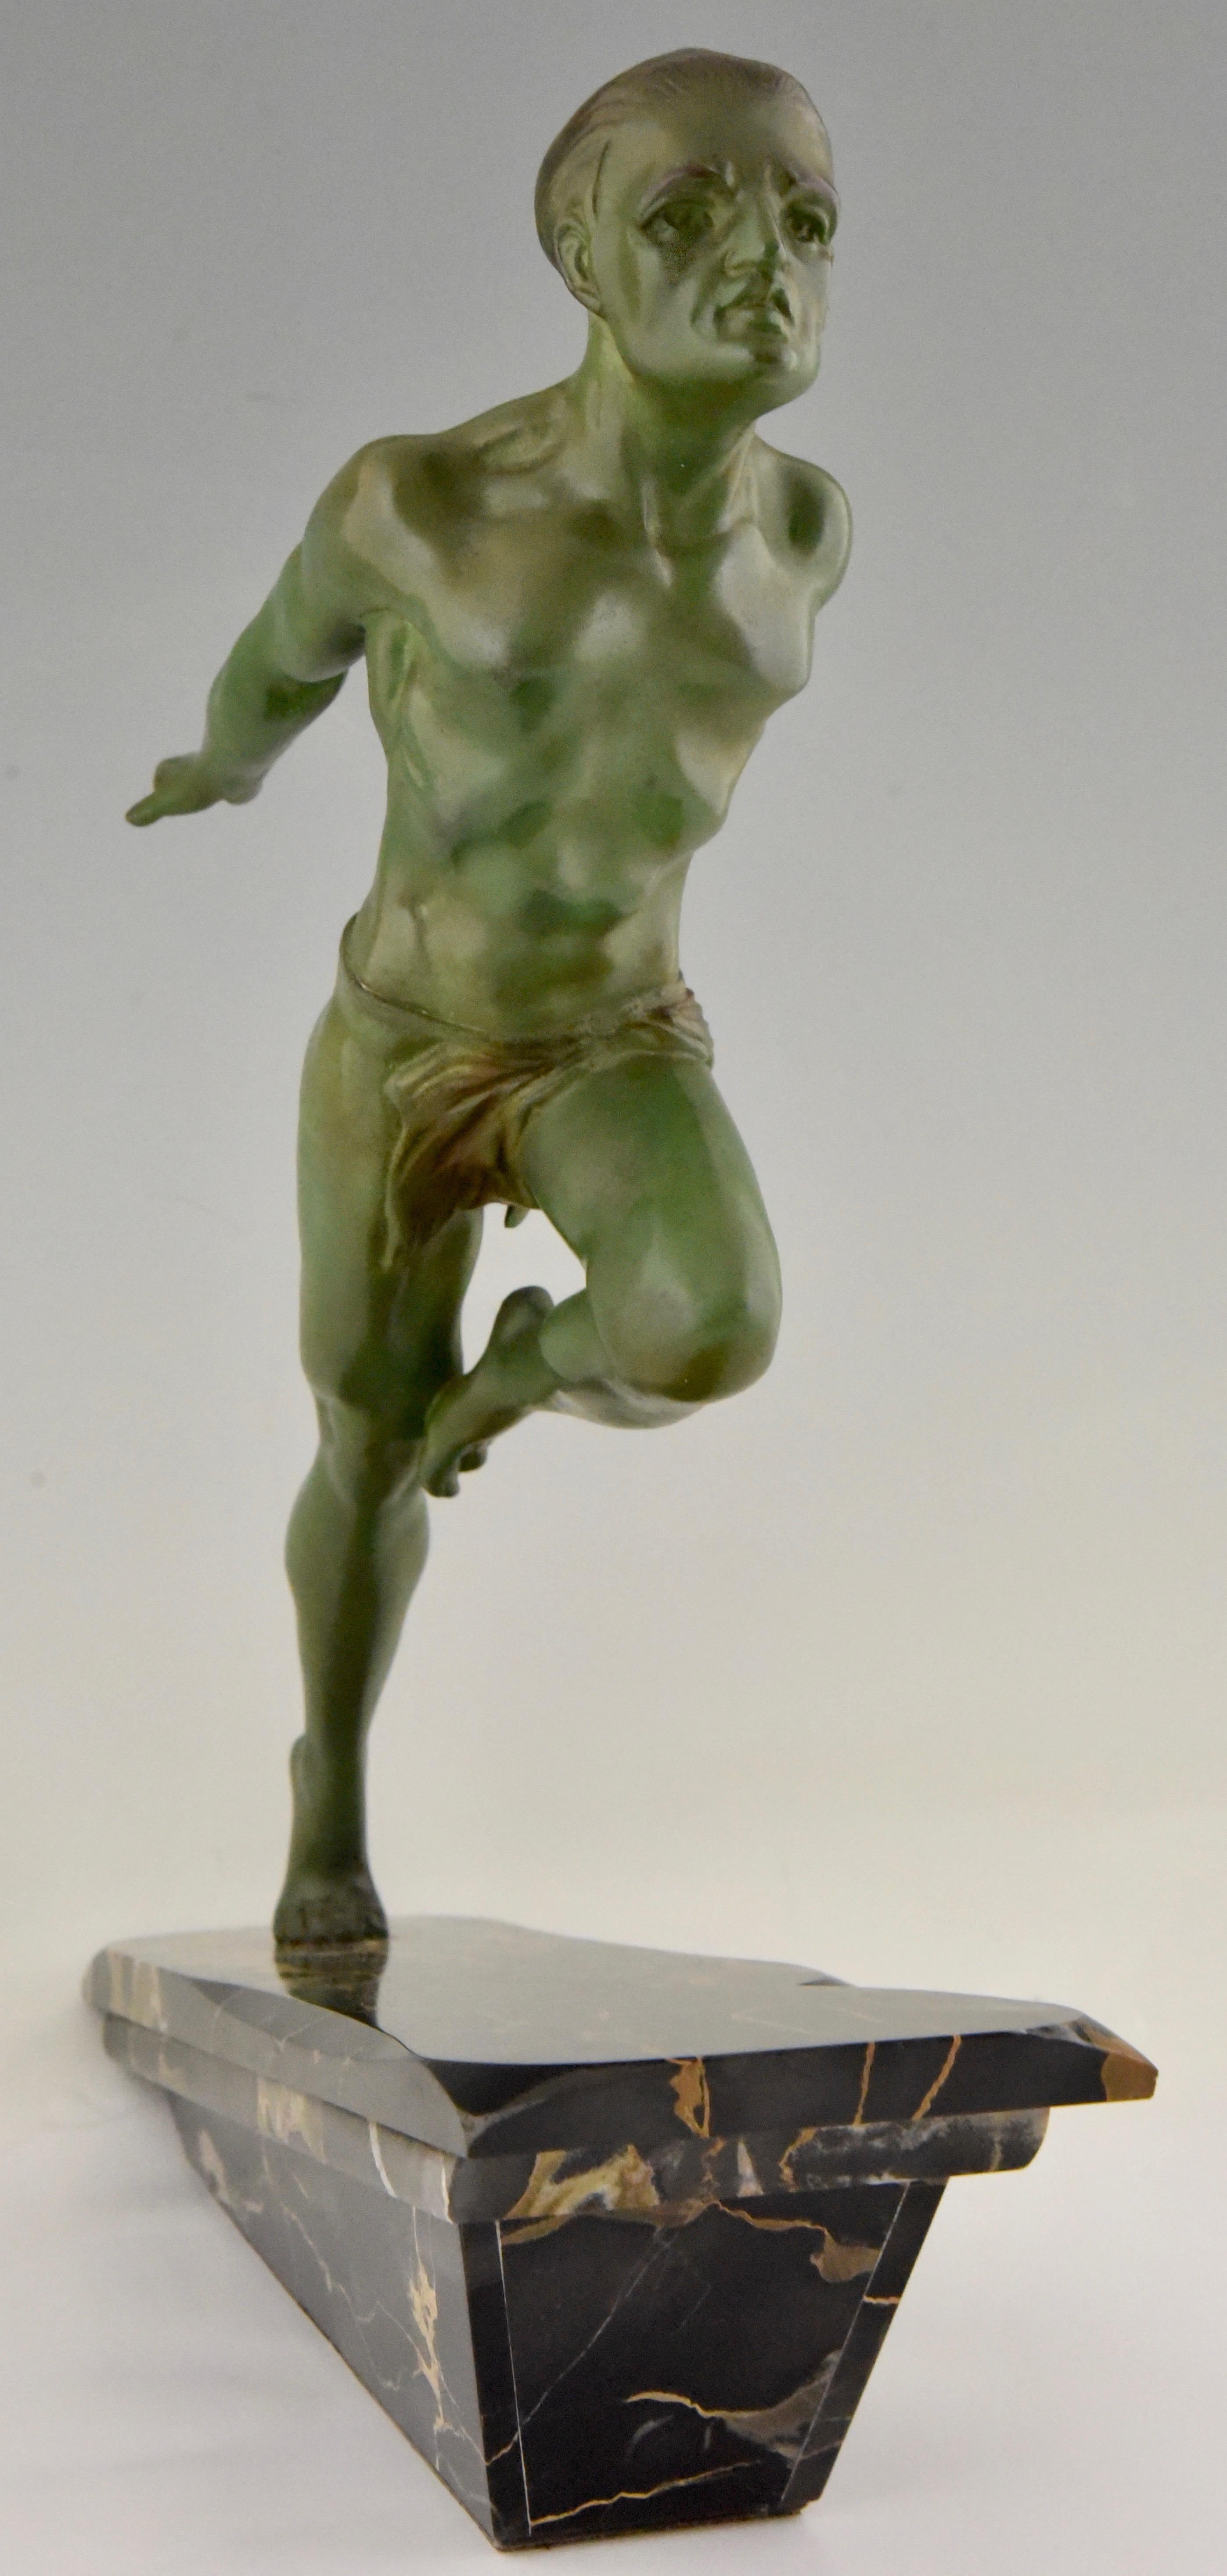 French Art Deco Sculpture Running Man or Athlete L. Valderi, France, 1930